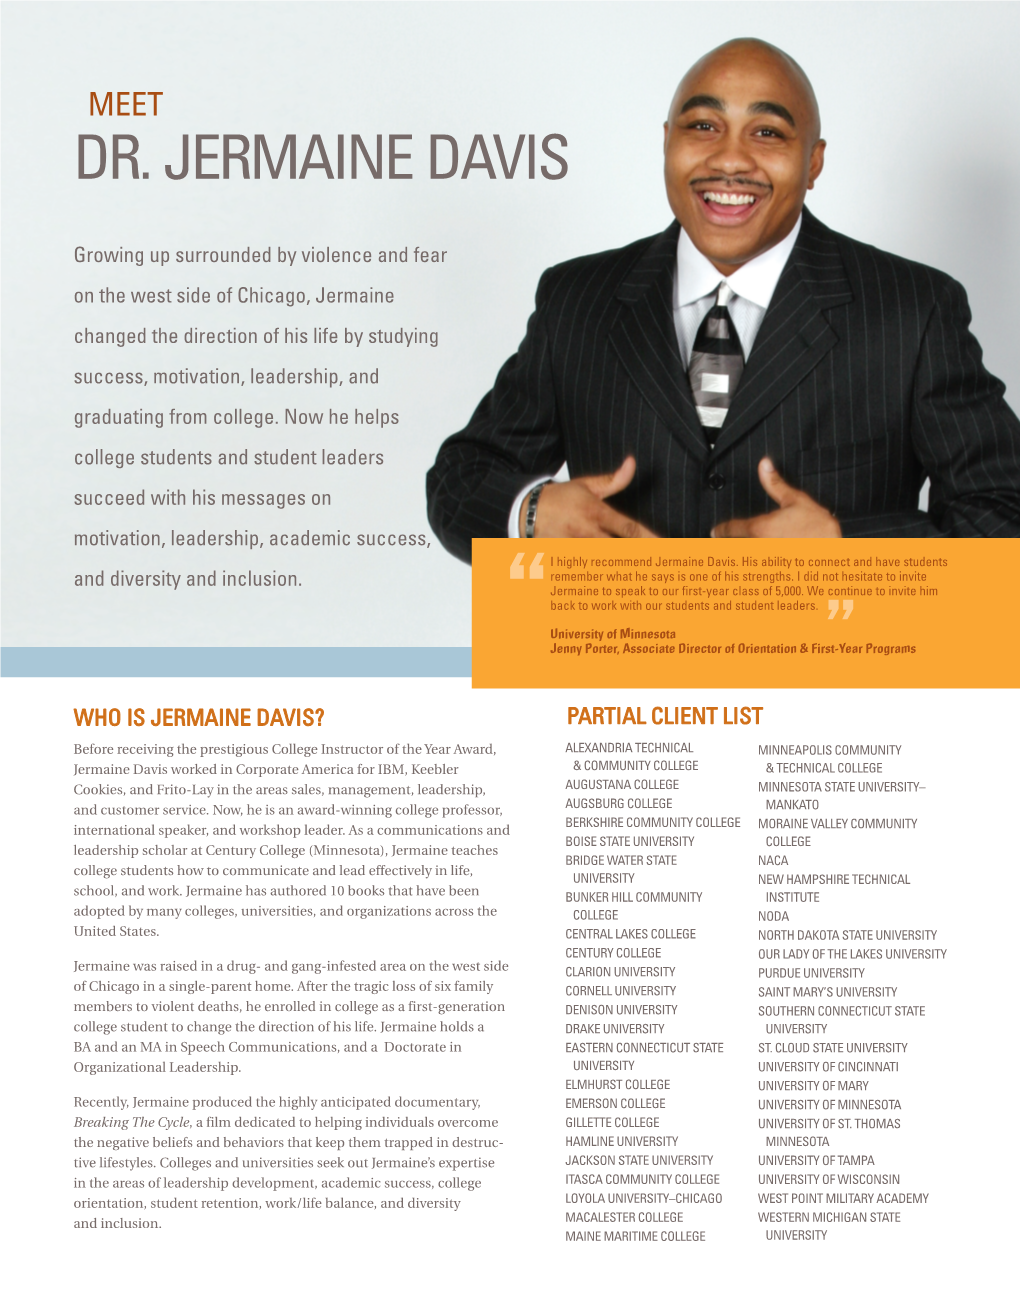 Dr. Jermaine Davis